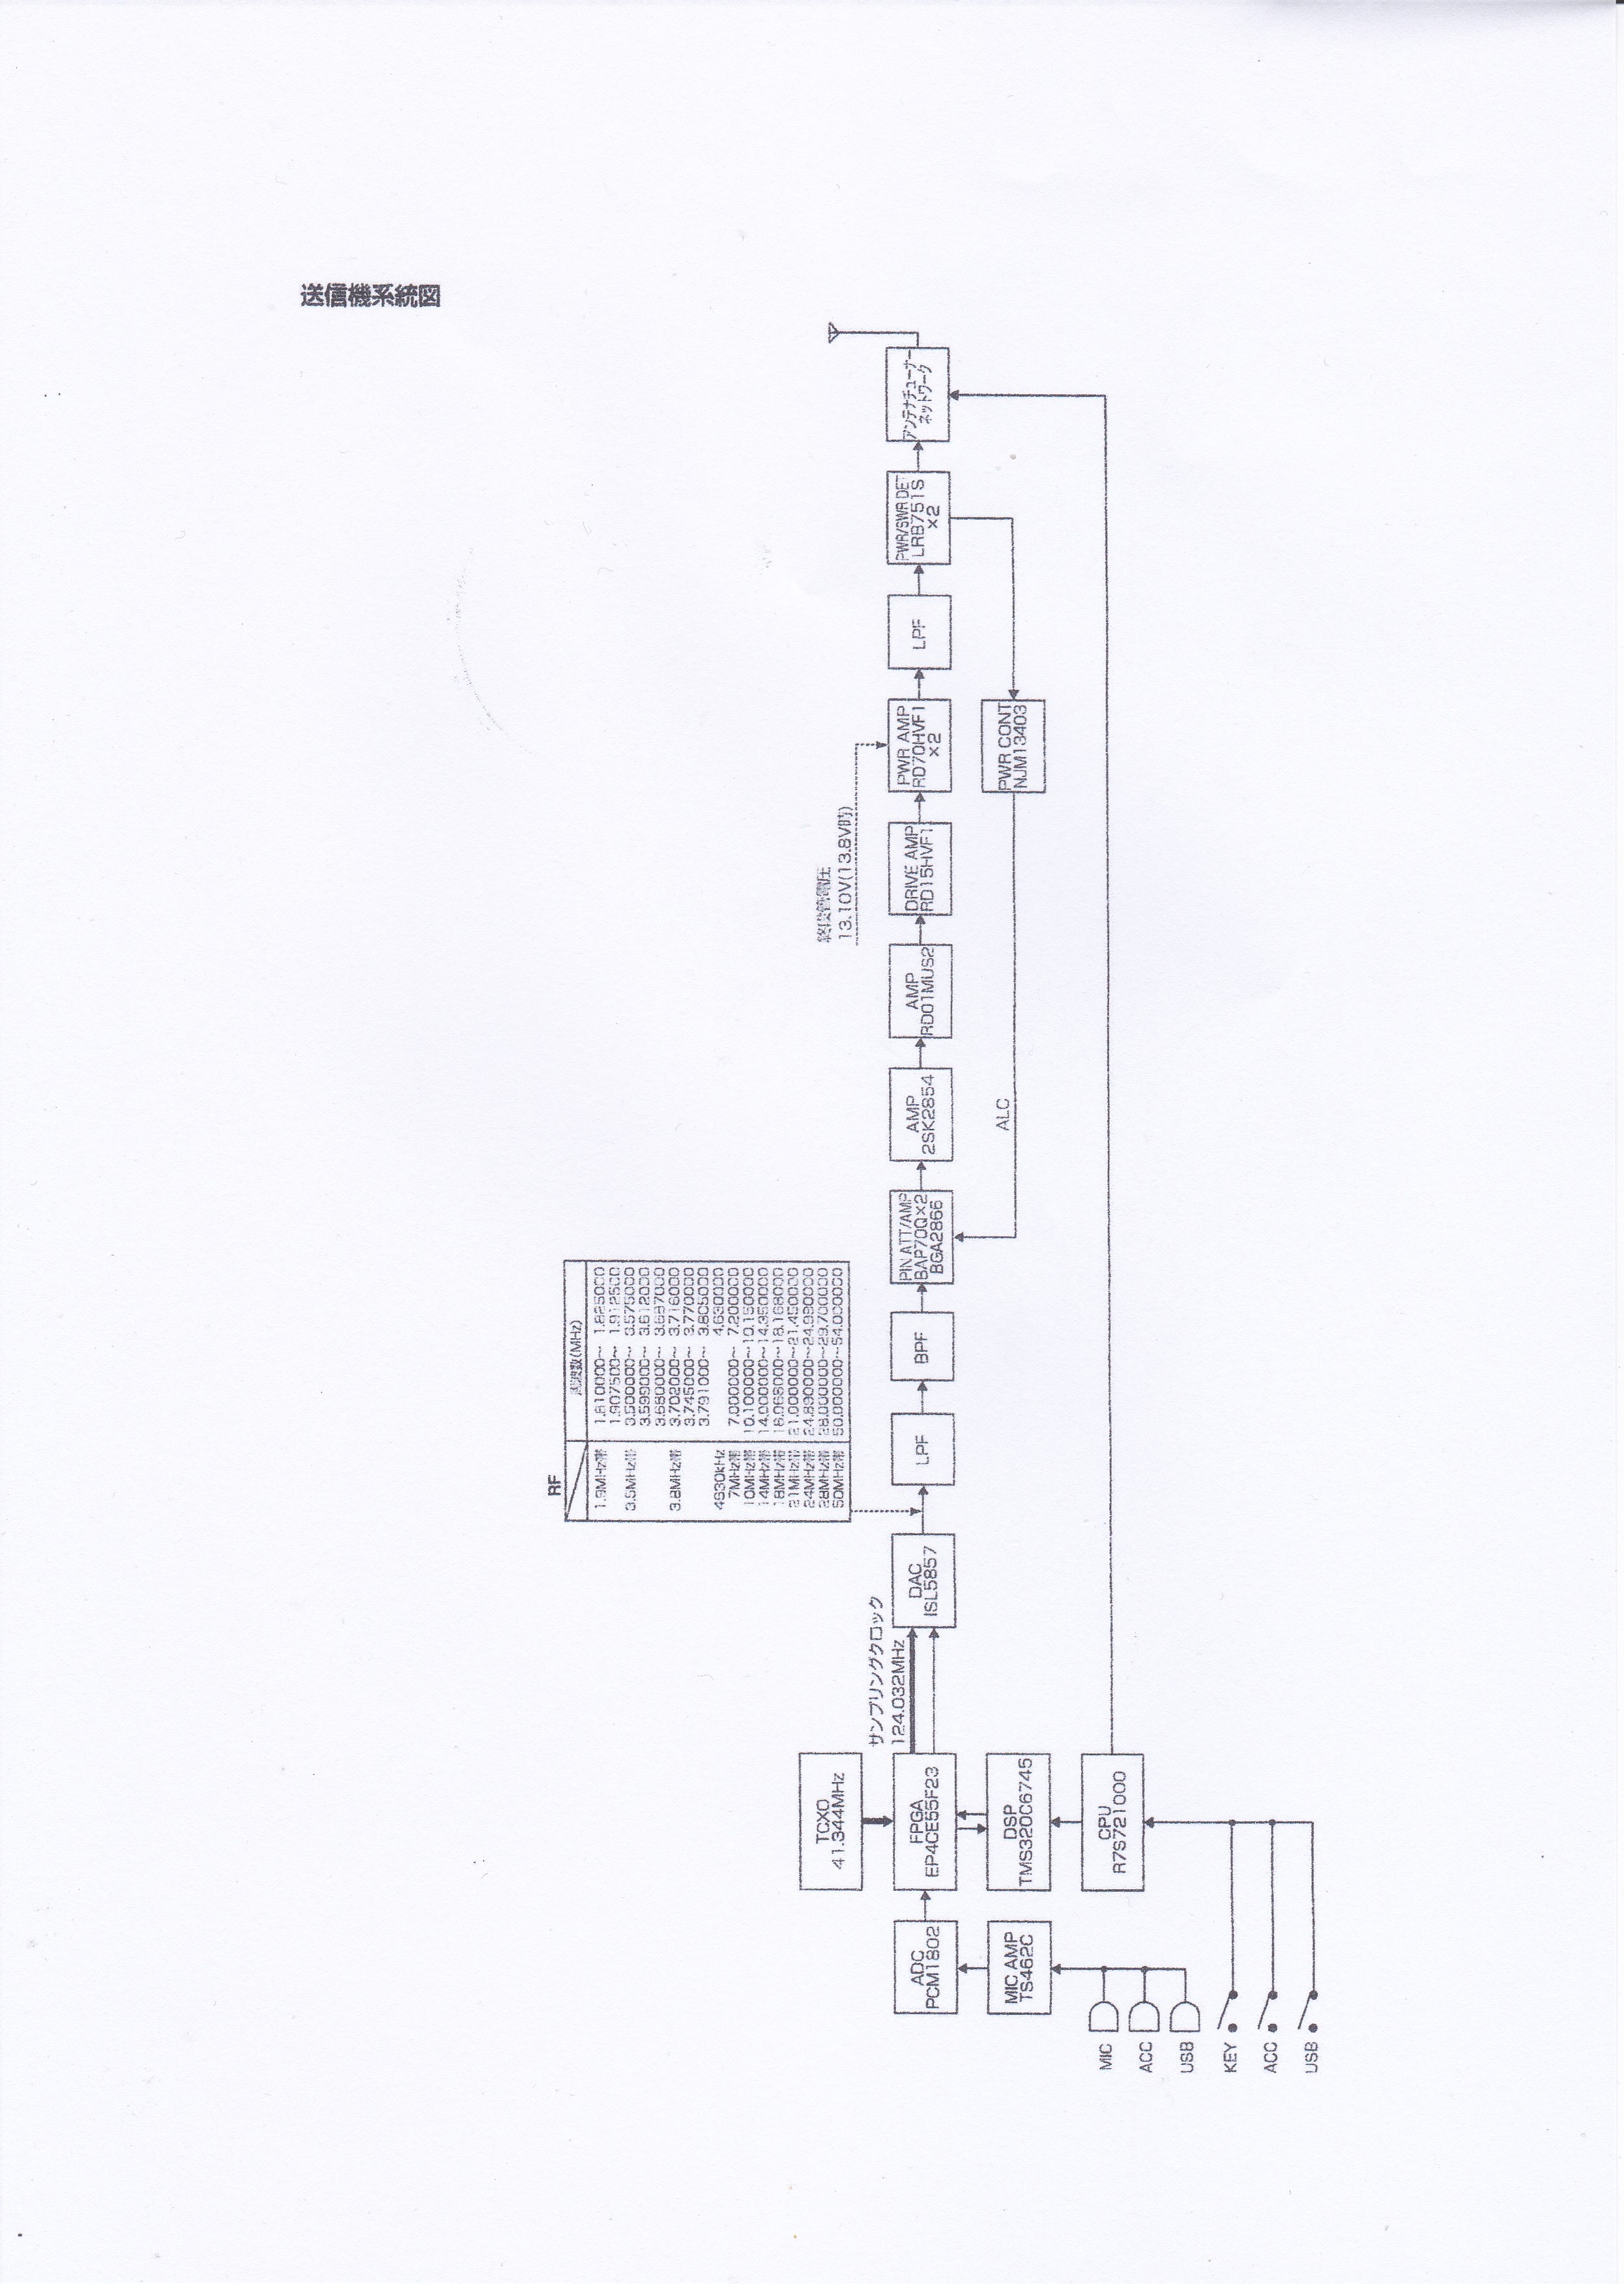 IC-7300系統図